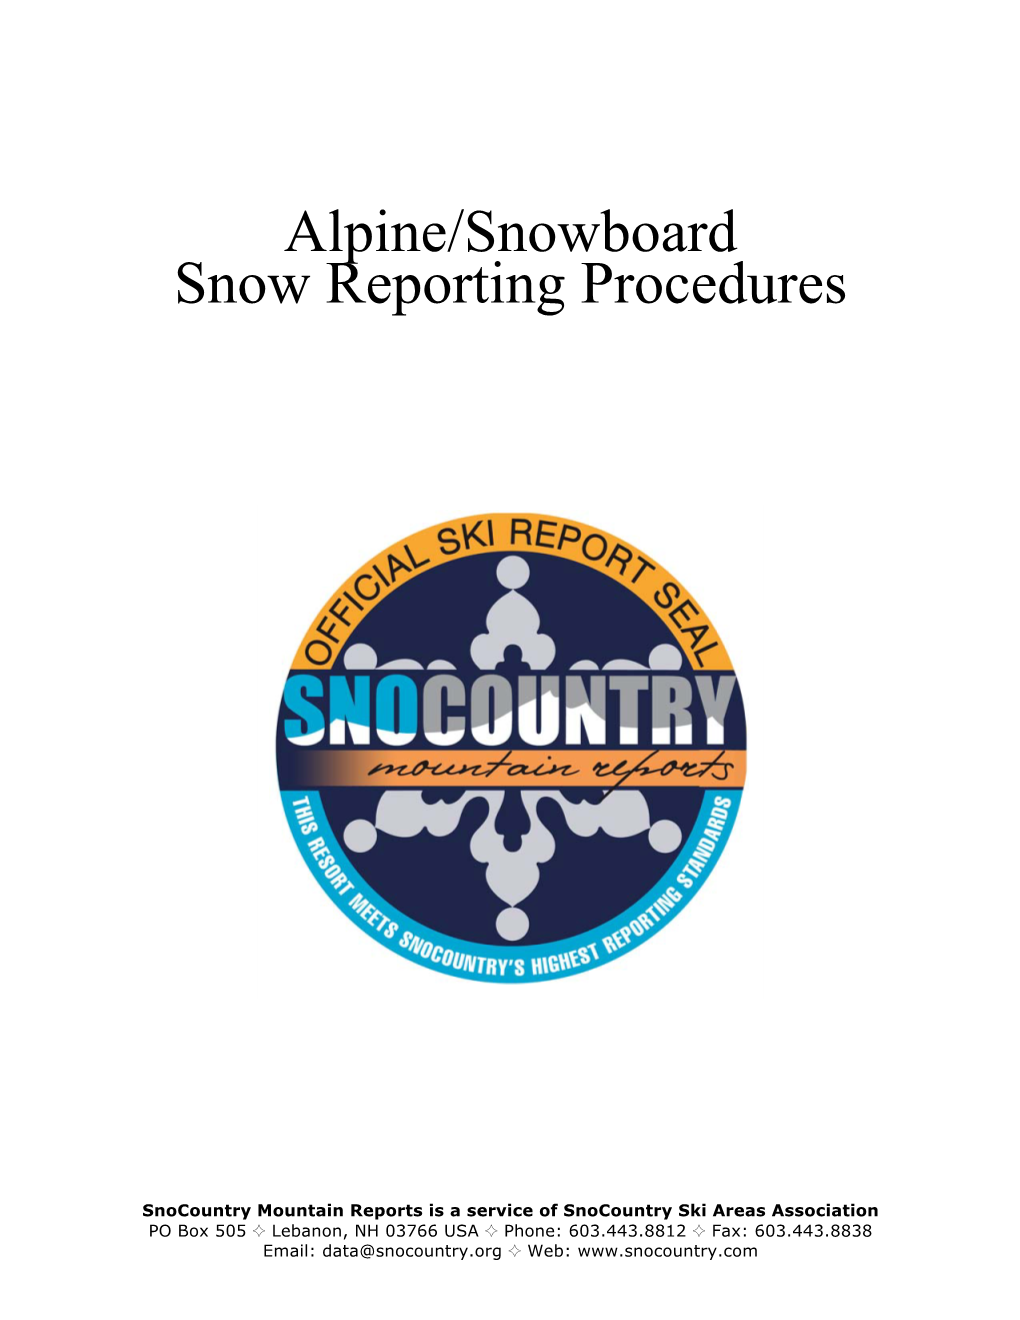 Alpine/Snowboard Snow Reporting Procedures